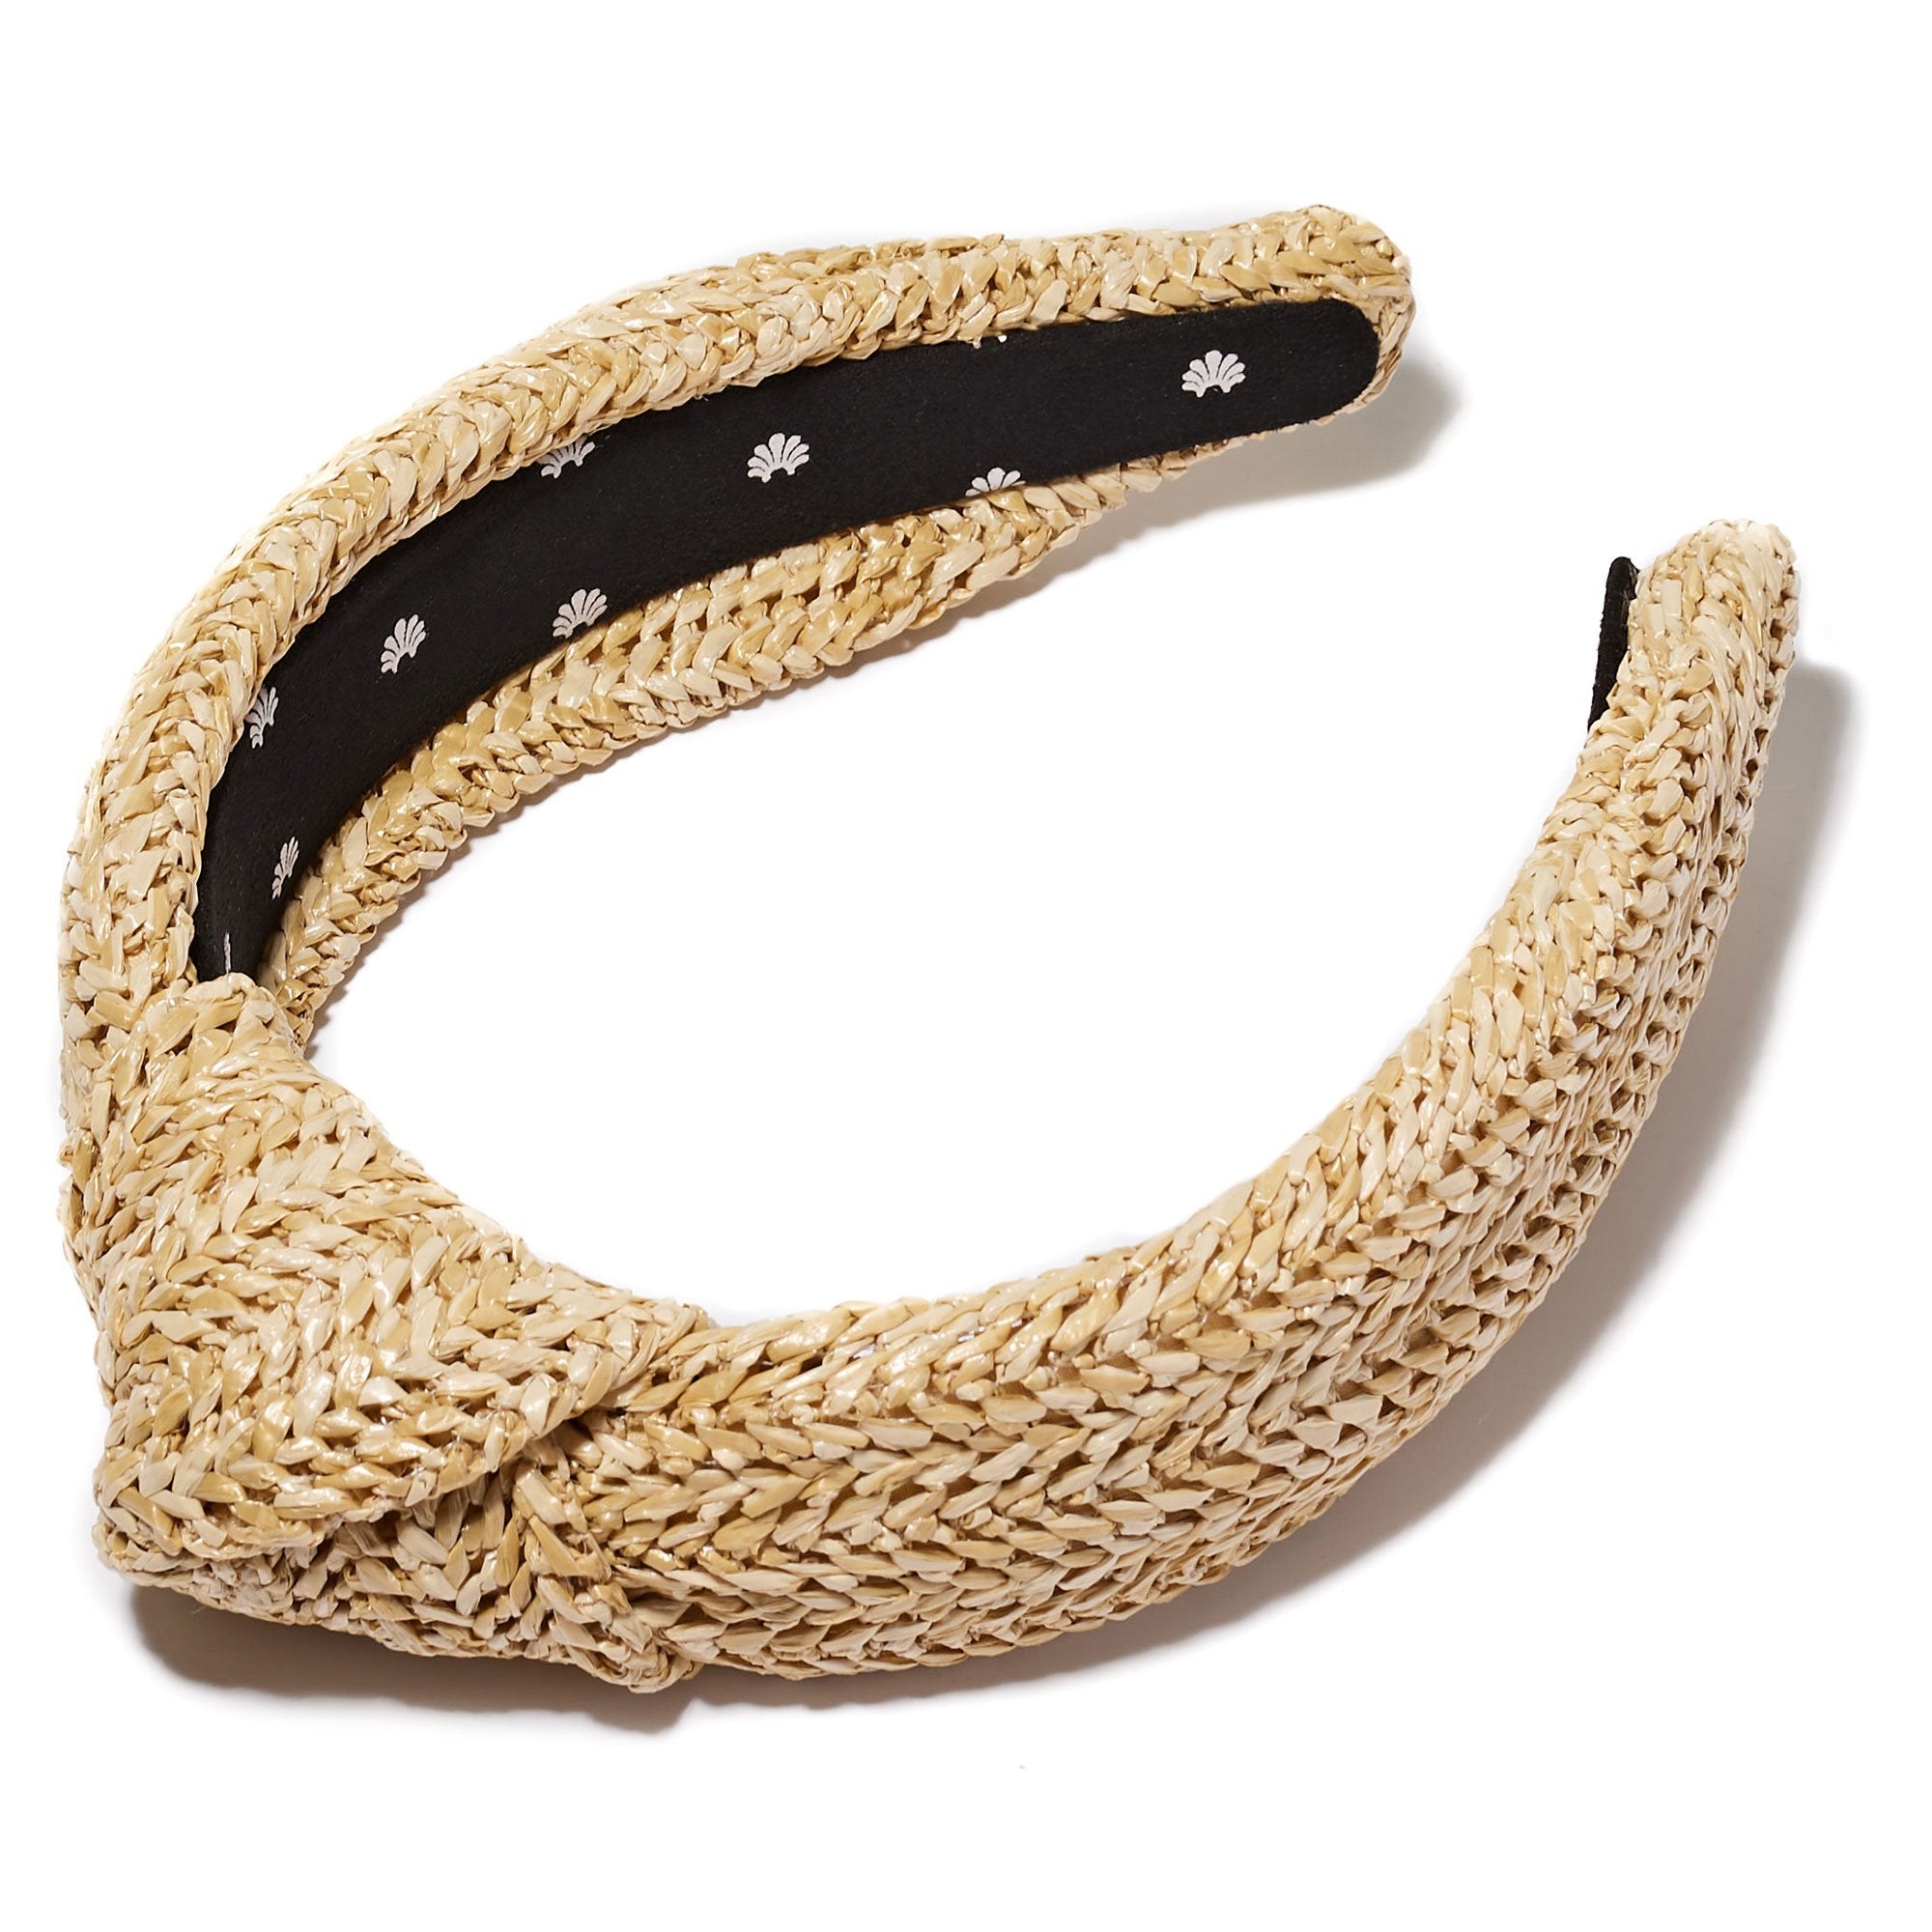 Kusan Navy Headband - Headbands - Le Comptoir Irlandais